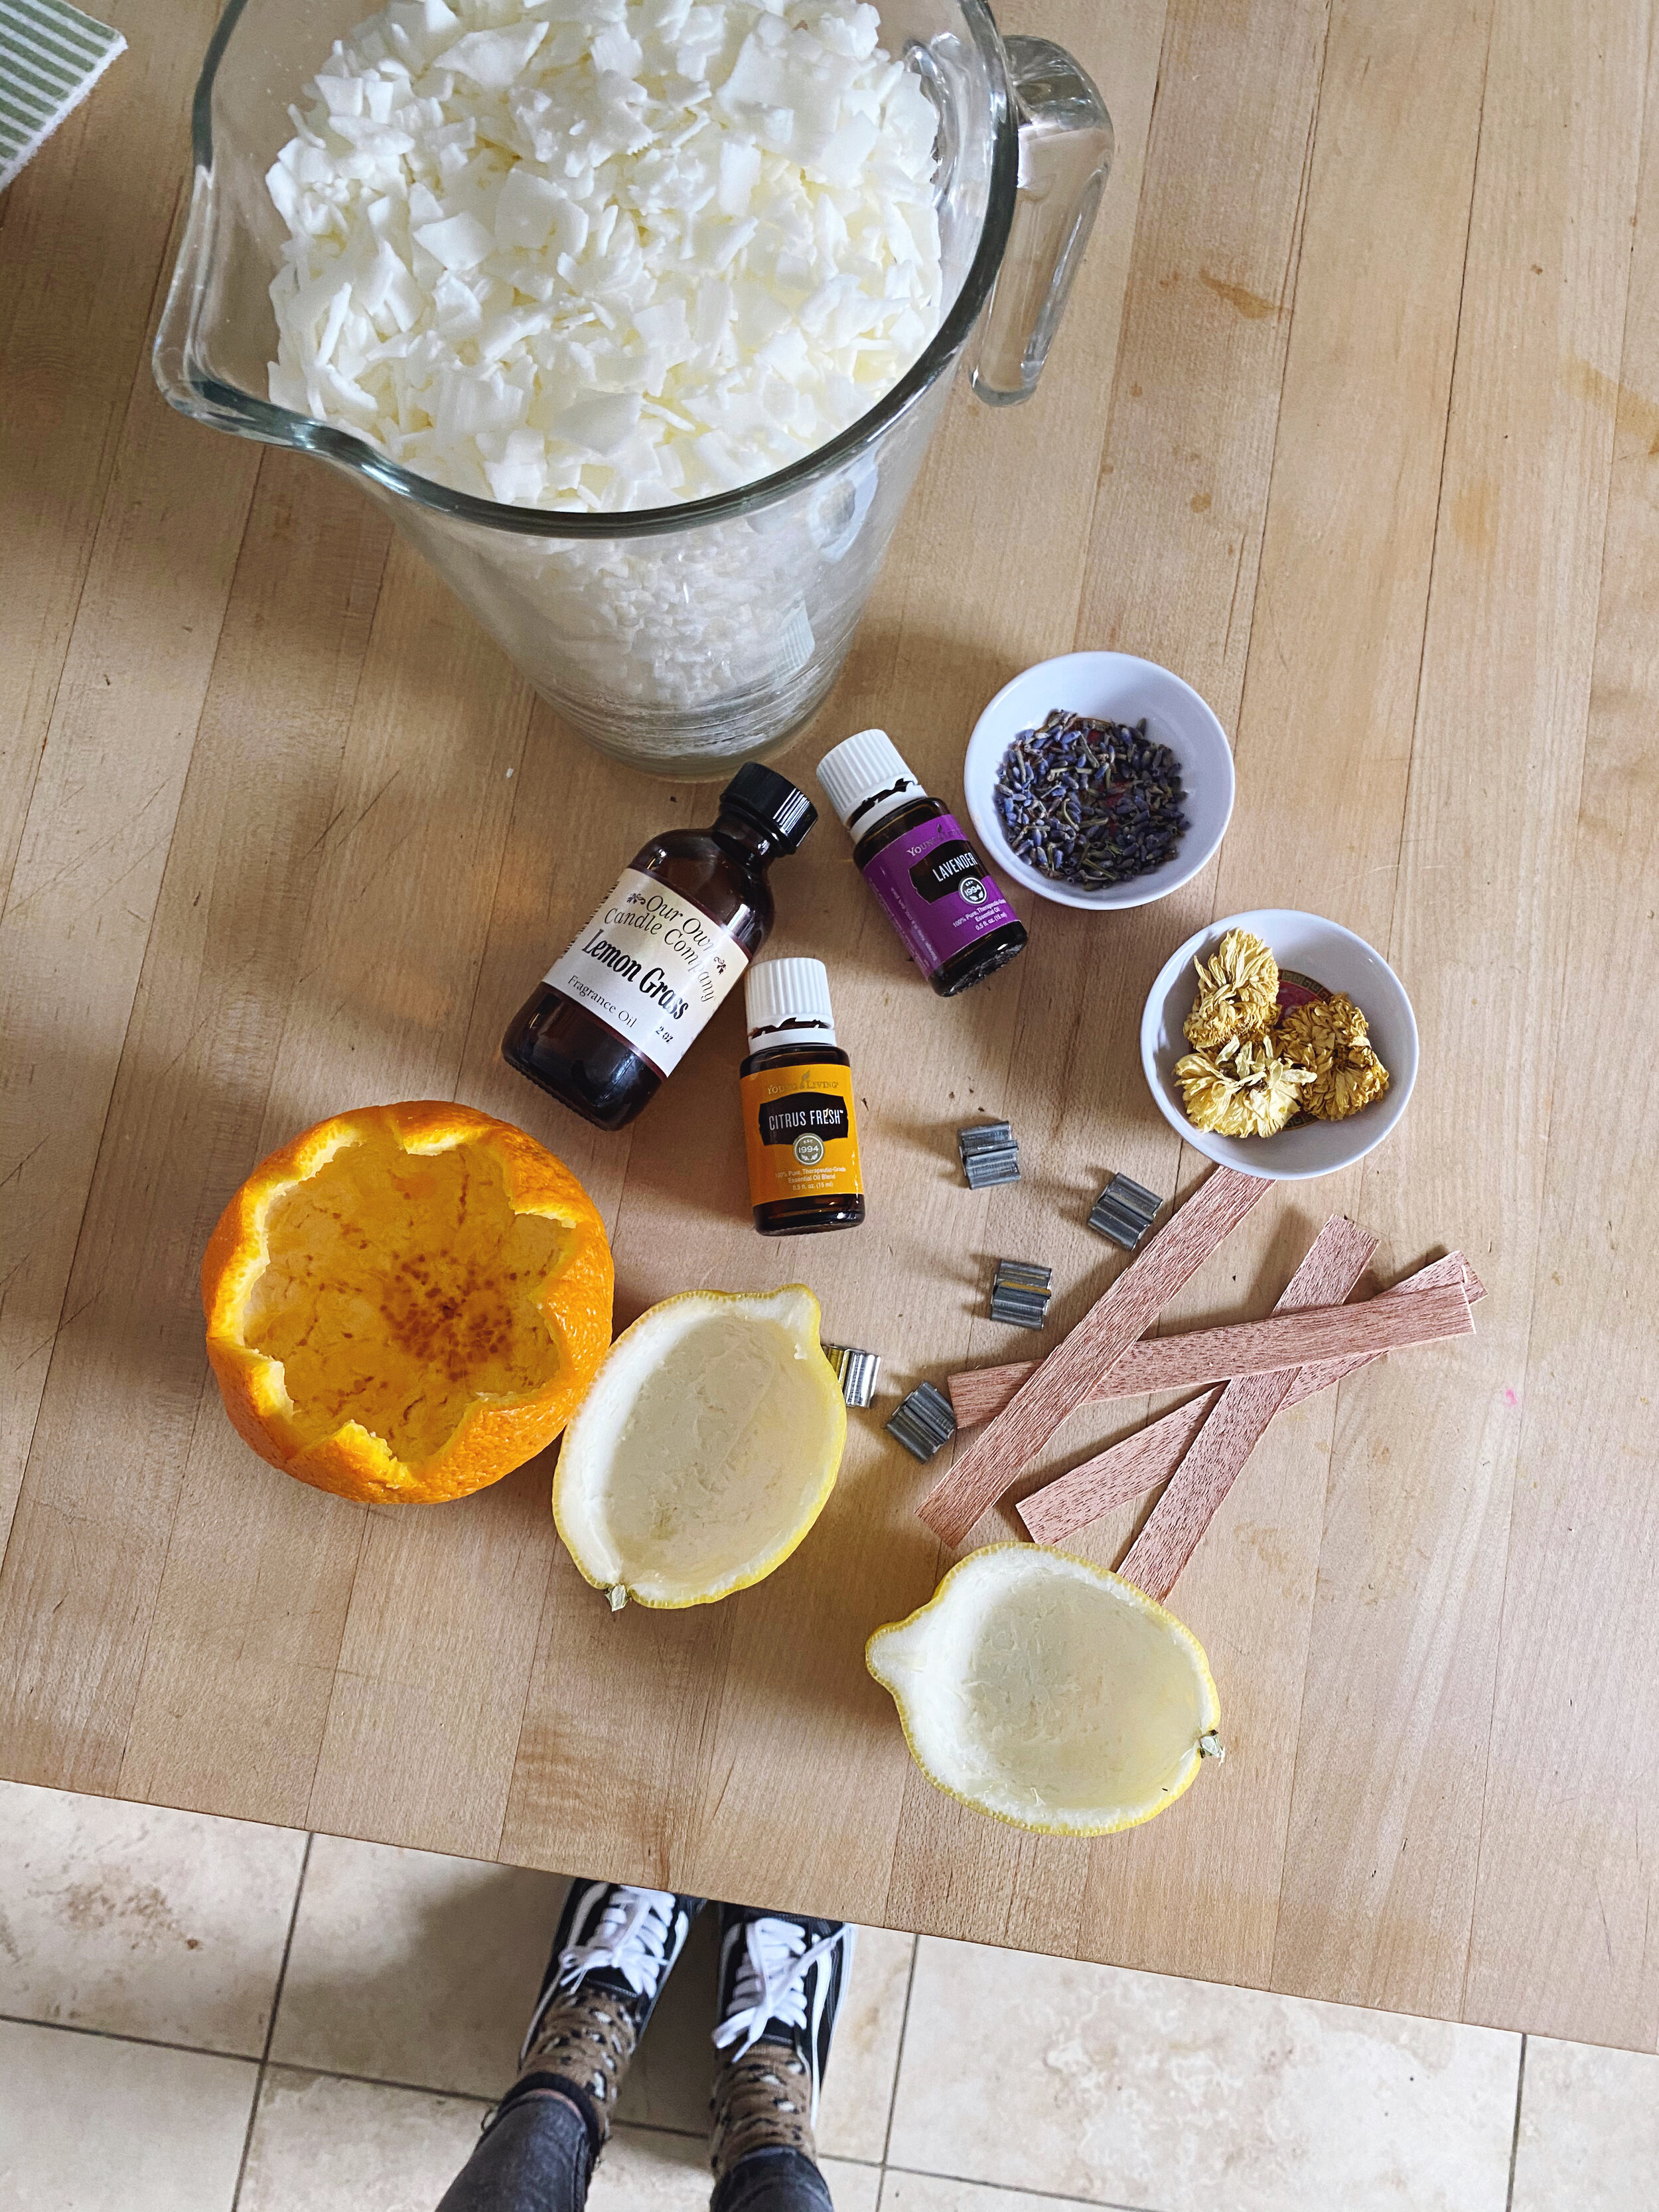 How to Make DIY Scented Soy Candles - Lemon Bergamot/Lavender/White Musk 